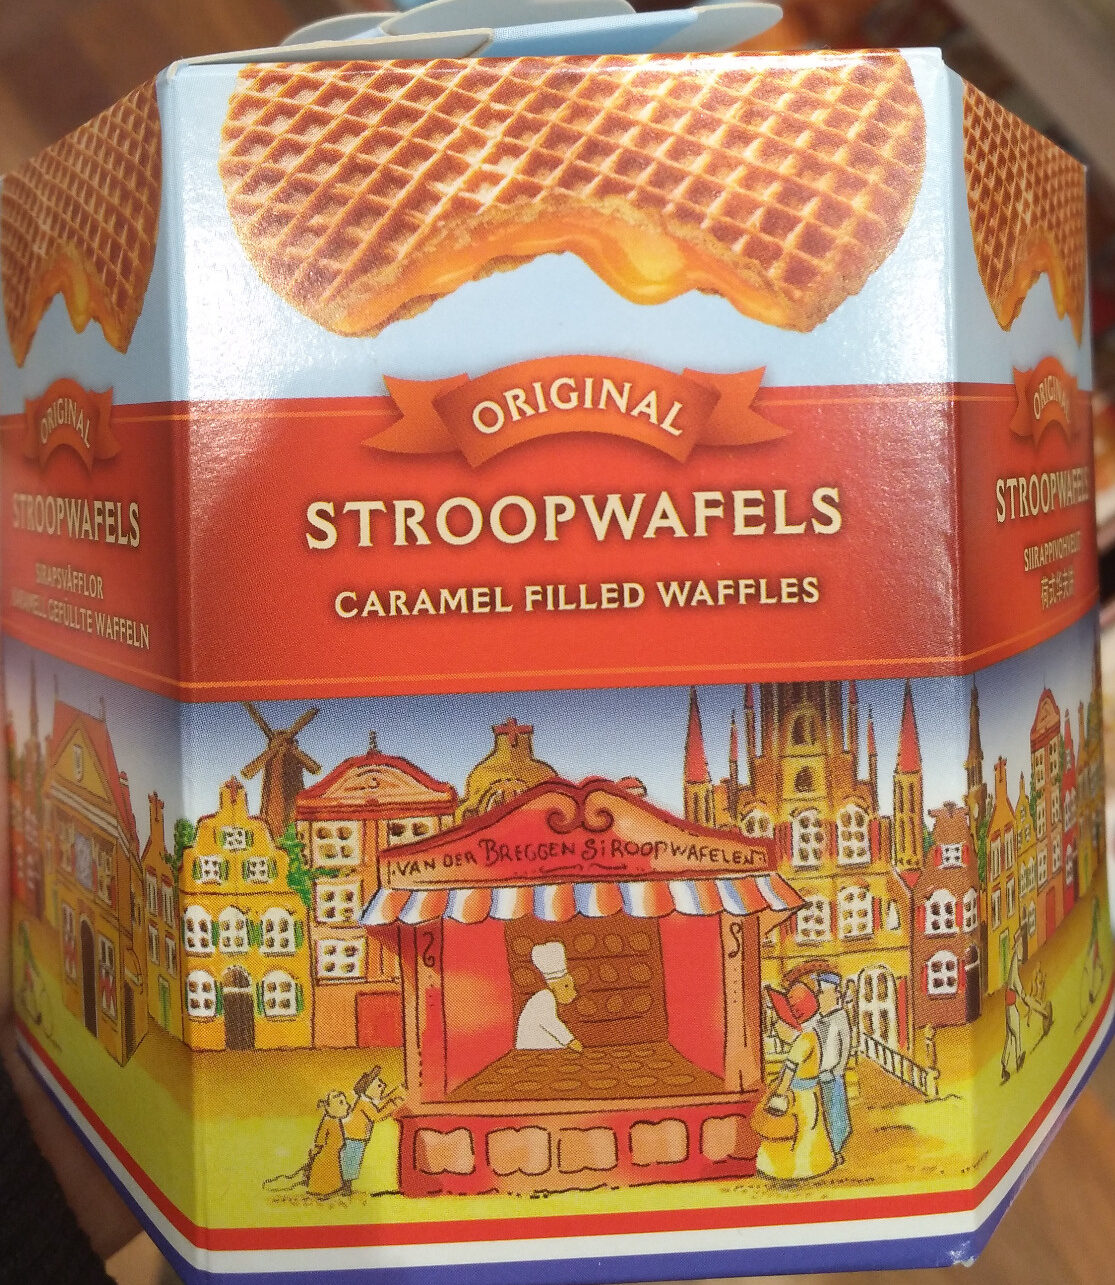 Original Stroopwafels - Product